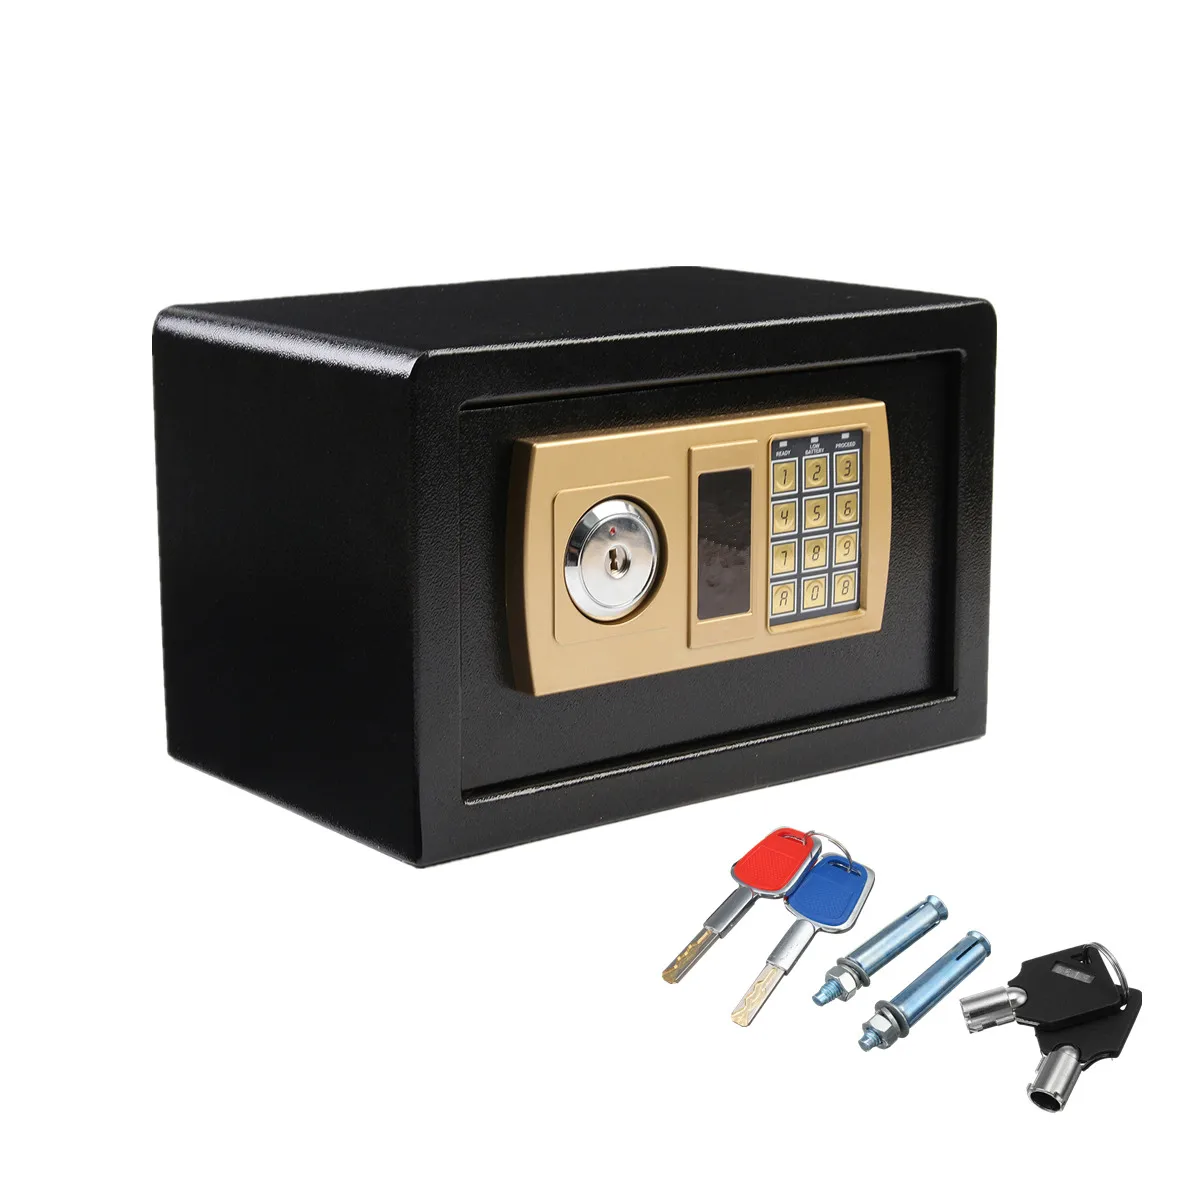 Home > it ® 25806 electrónicos mini-safe/Vault minitresor caudales caja fuerte de pared 